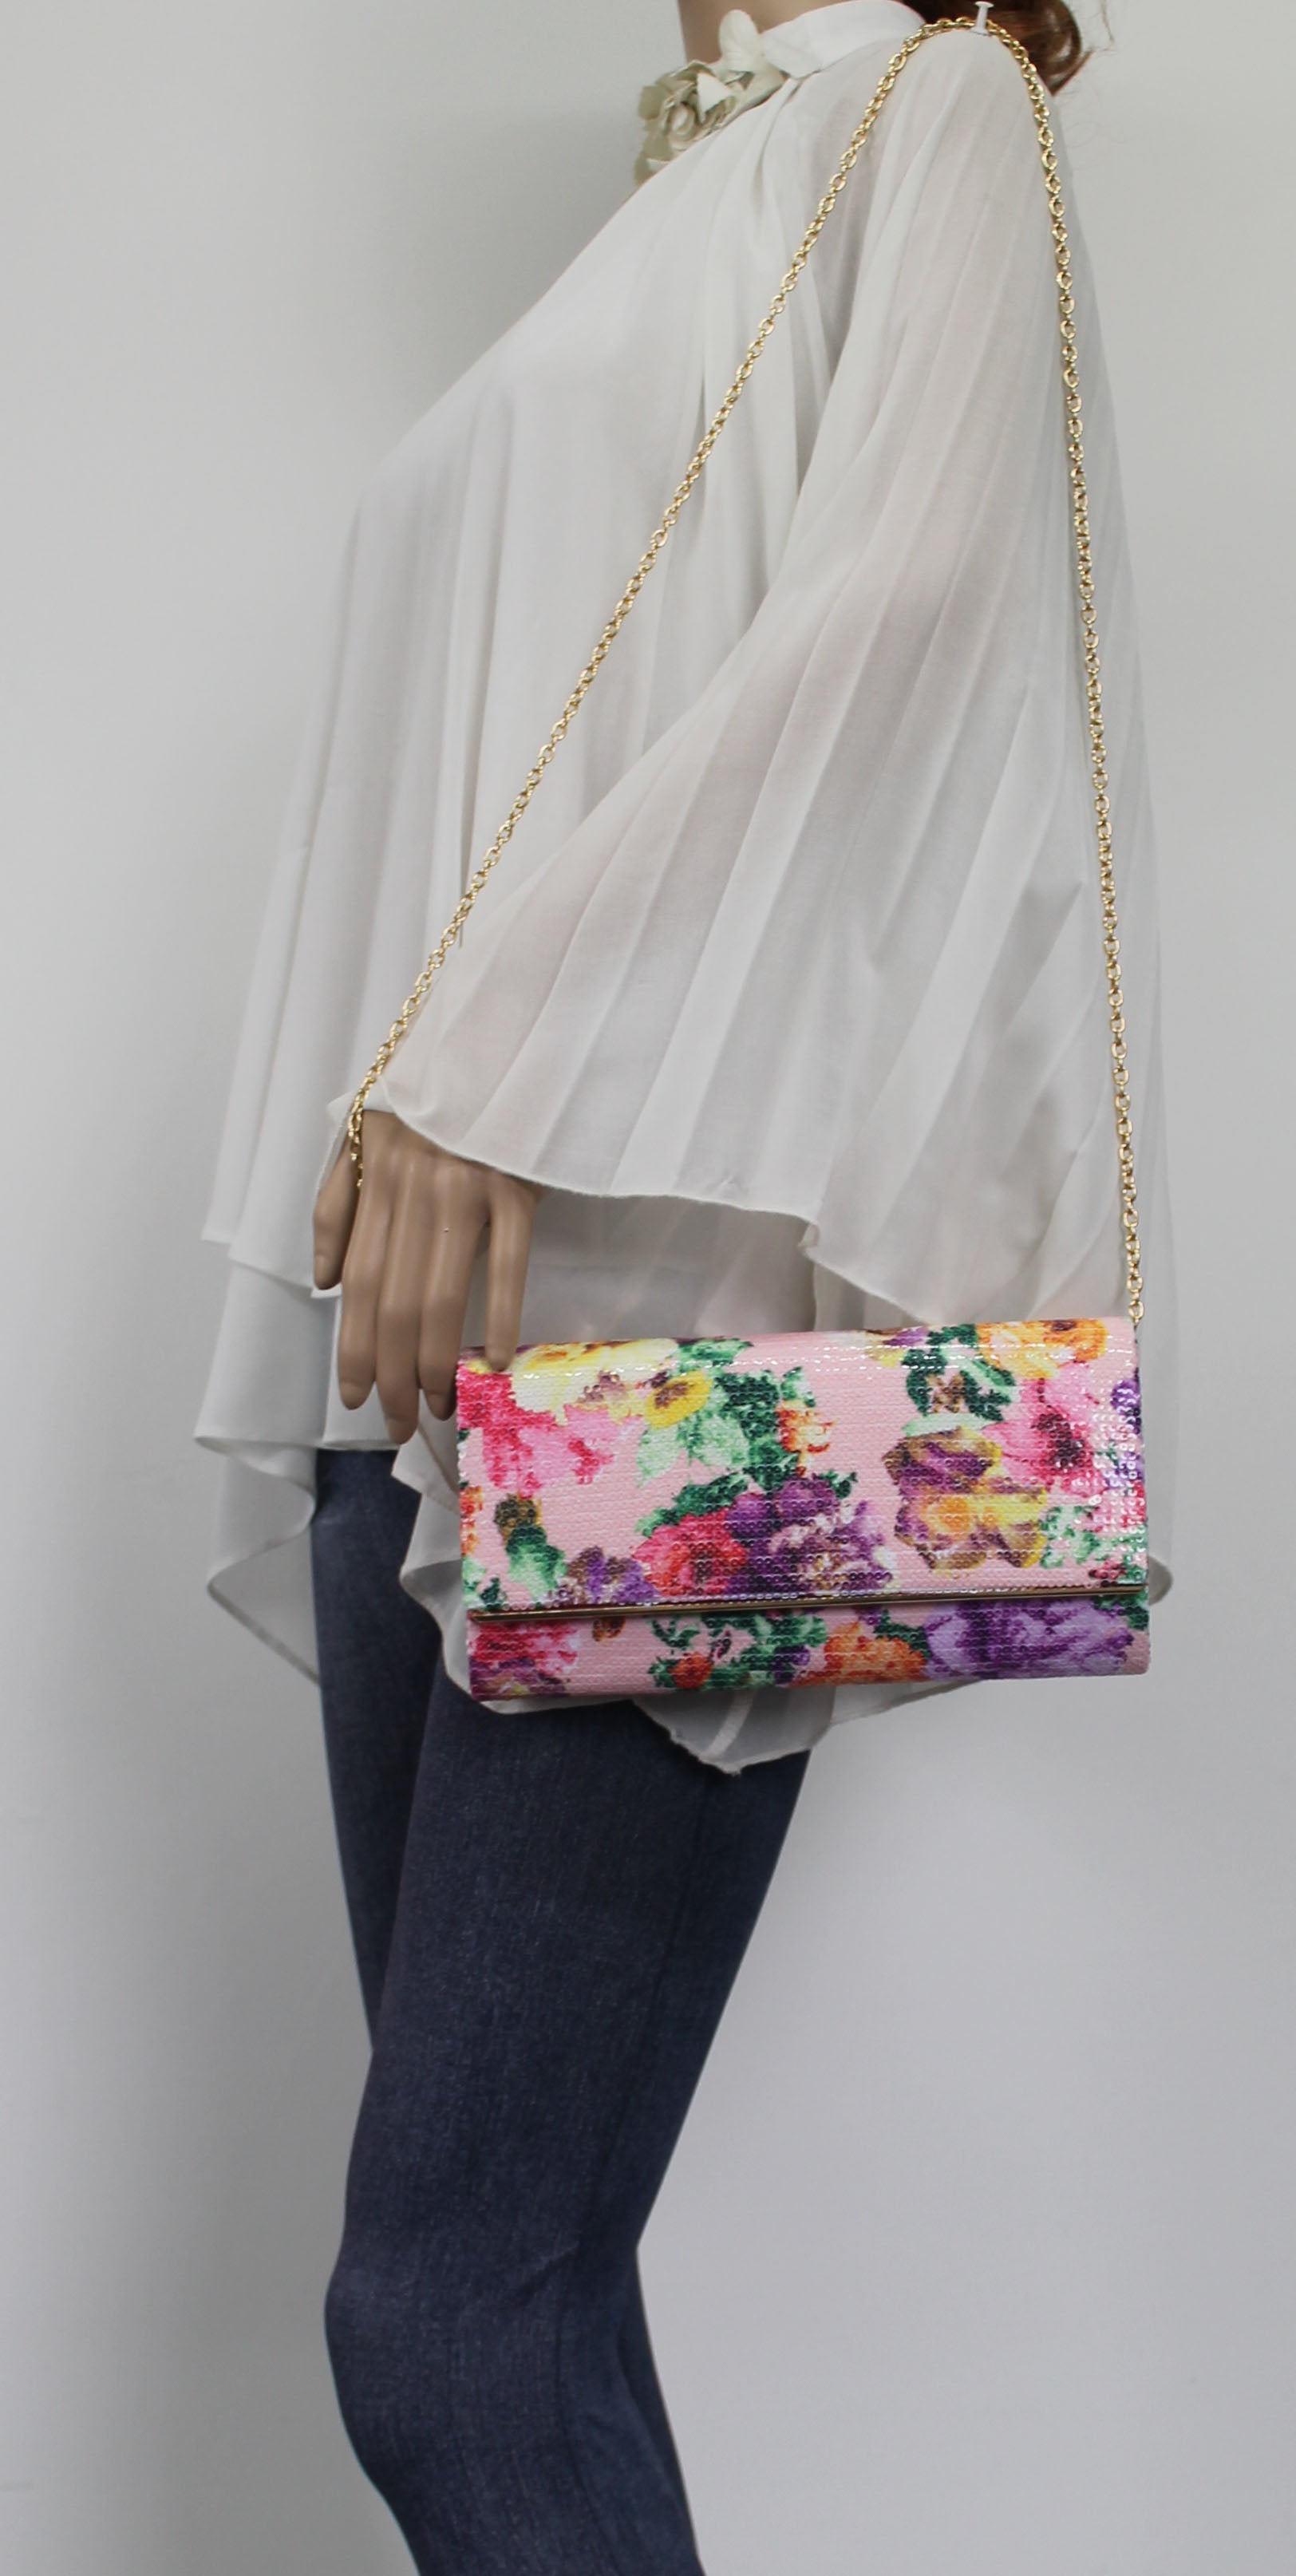 SWANKYSWANS Kyra Clutch Bag Pink Cute Cheap Clutch Bag For Weddings School and Work